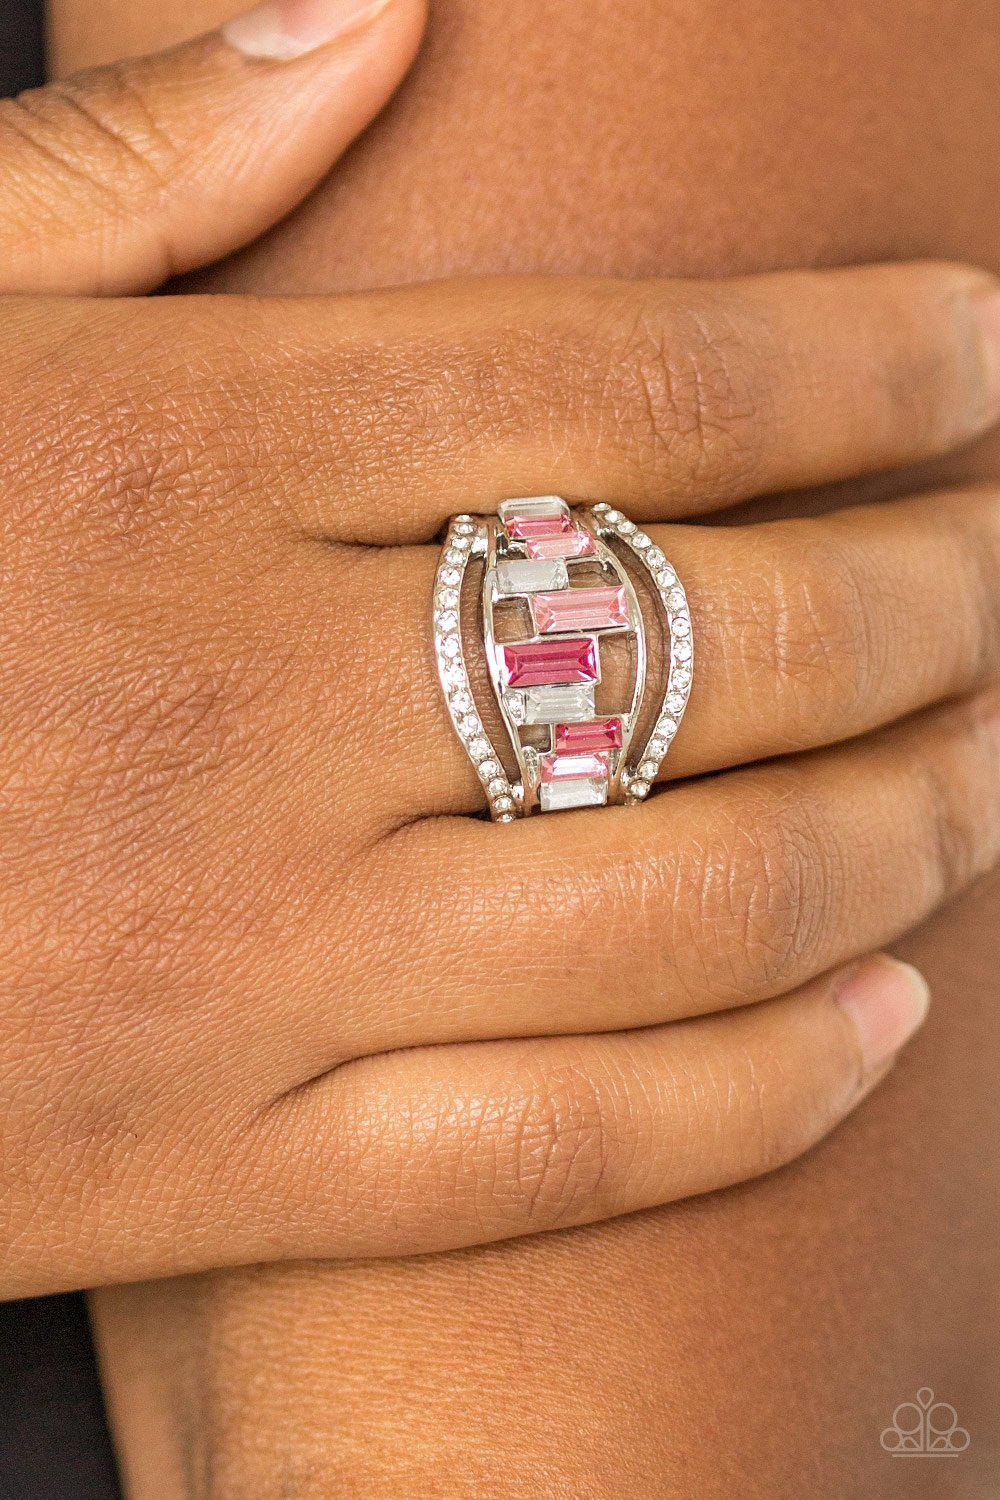 Treasure Chest Charm Pink Rhinestone Ring - Paparazzi Accessories- model - CarasShop.com - $5 Jewelry by Cara Jewels